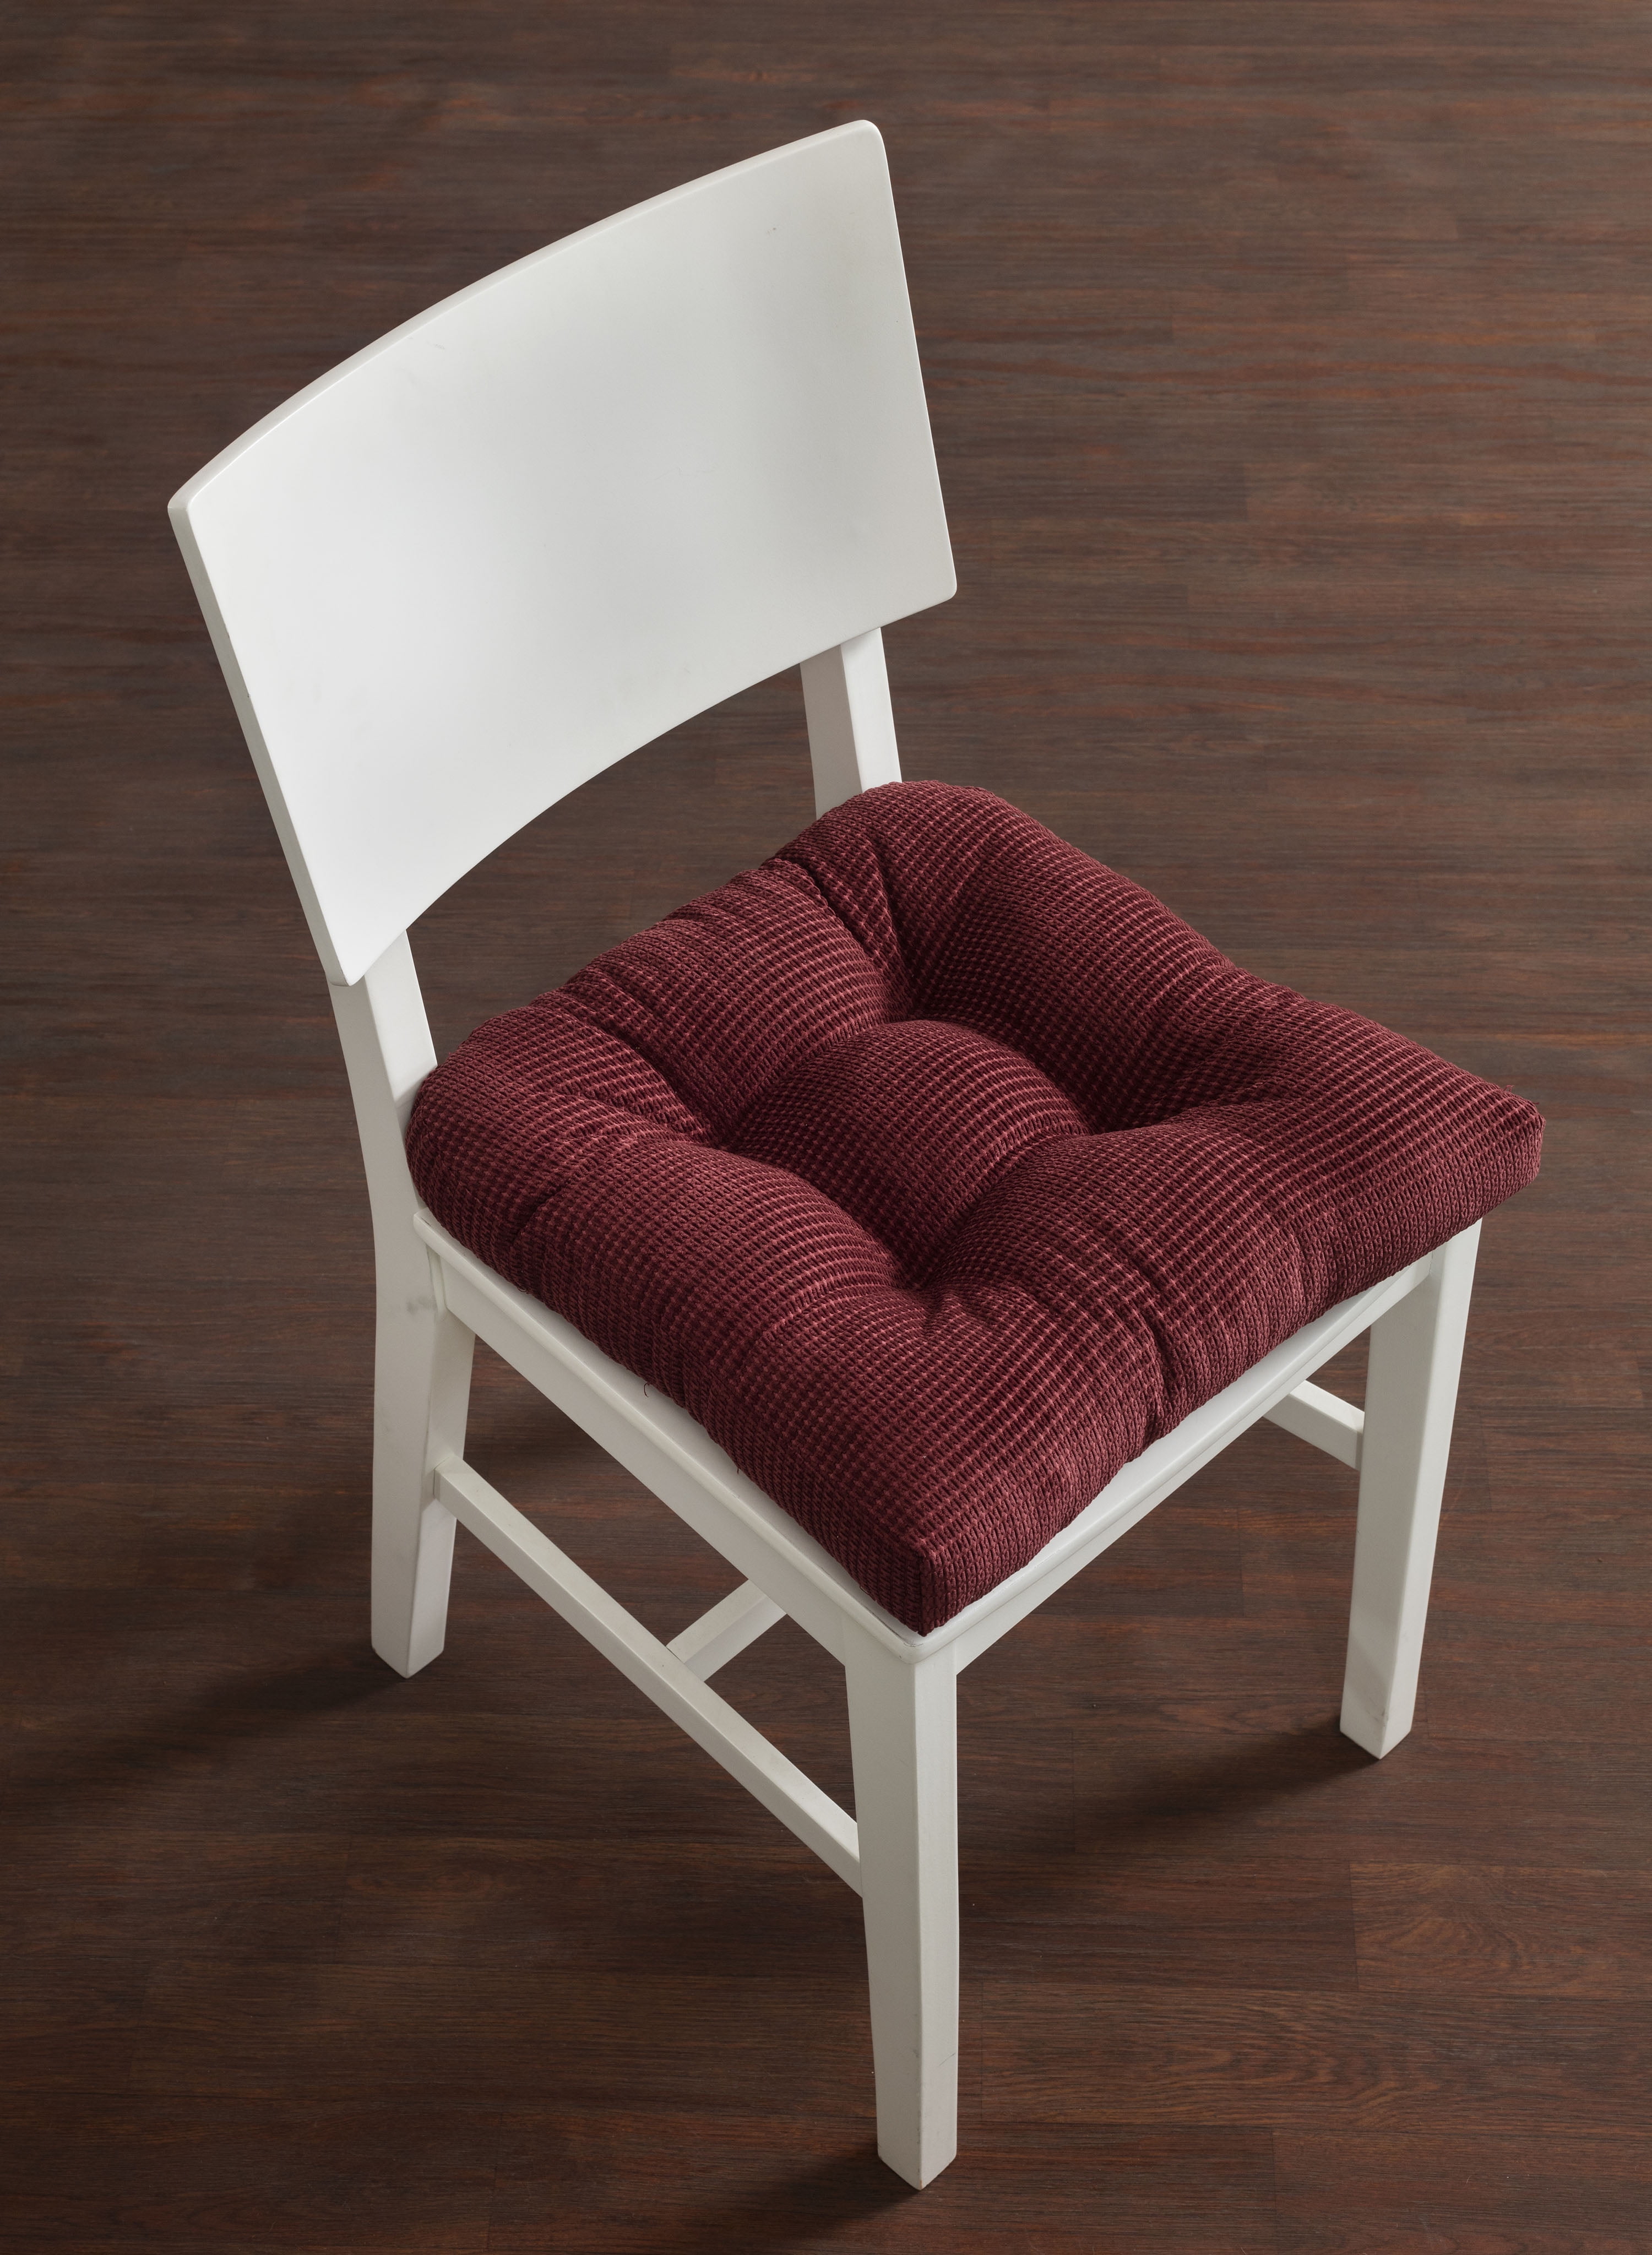 Office Chair Cushions 10x13In Chair Cushions for Dining Chairs Chair  MatHome Cushion Sofa Texture Bedside Cushion for